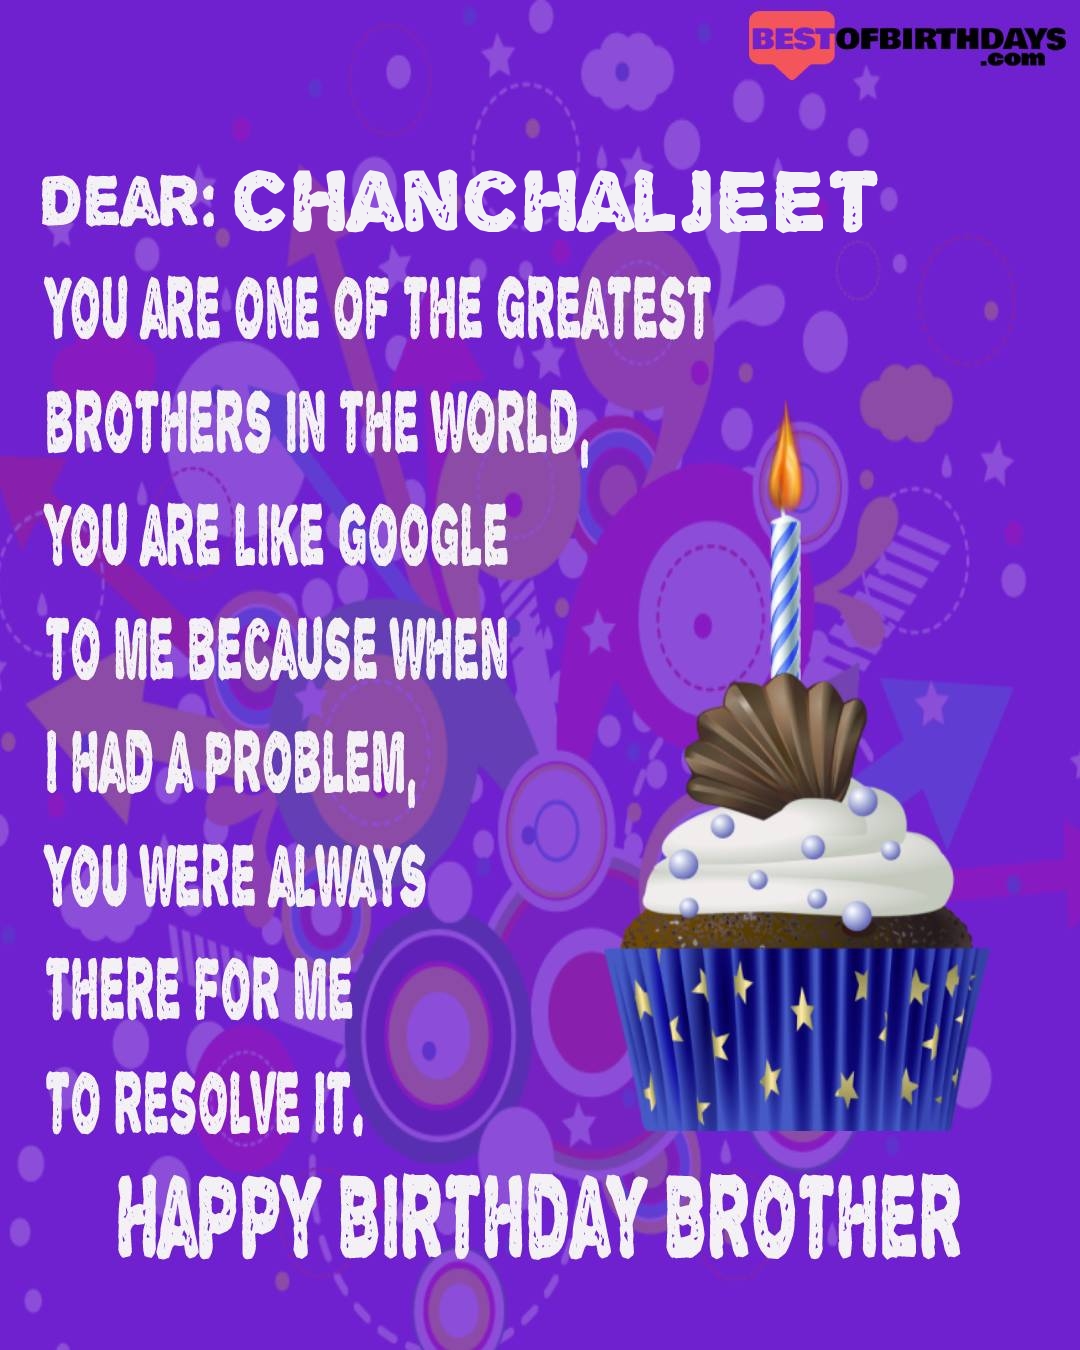 Happy birthday chanchaljeet bhai brother bro